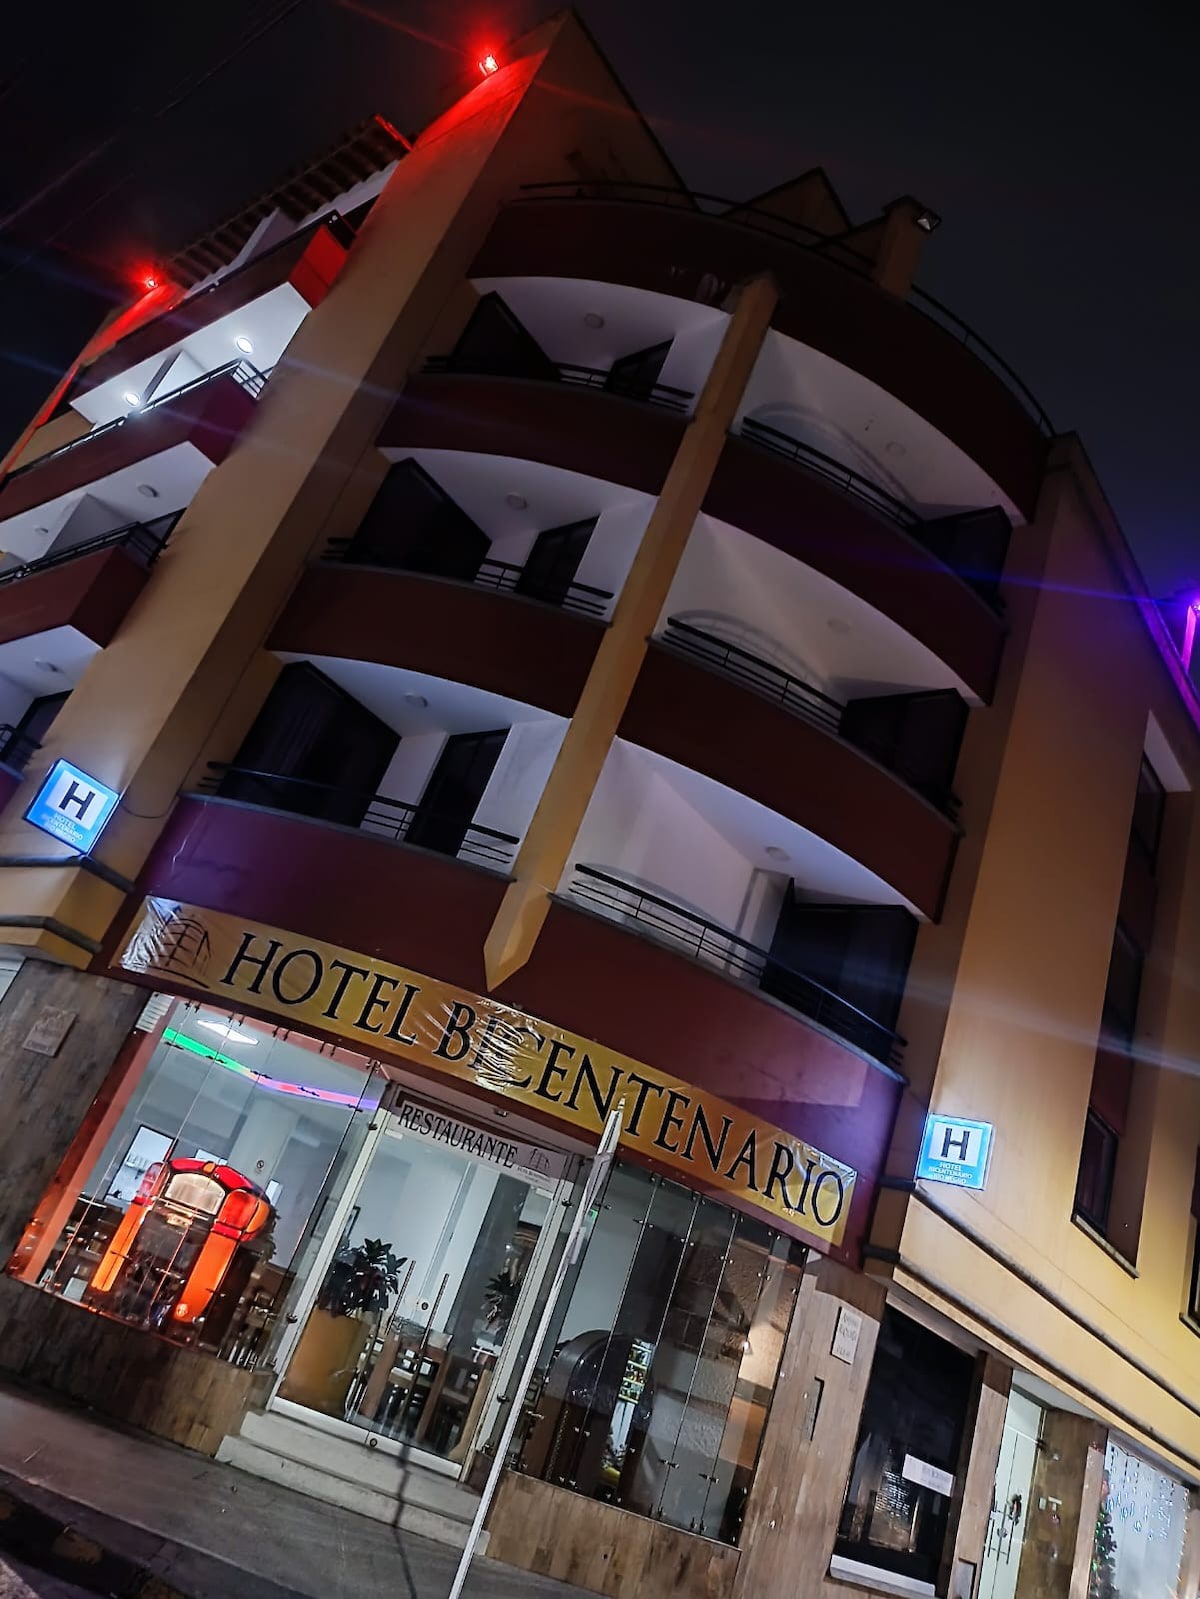 Hotel Bicentenario Rionegro